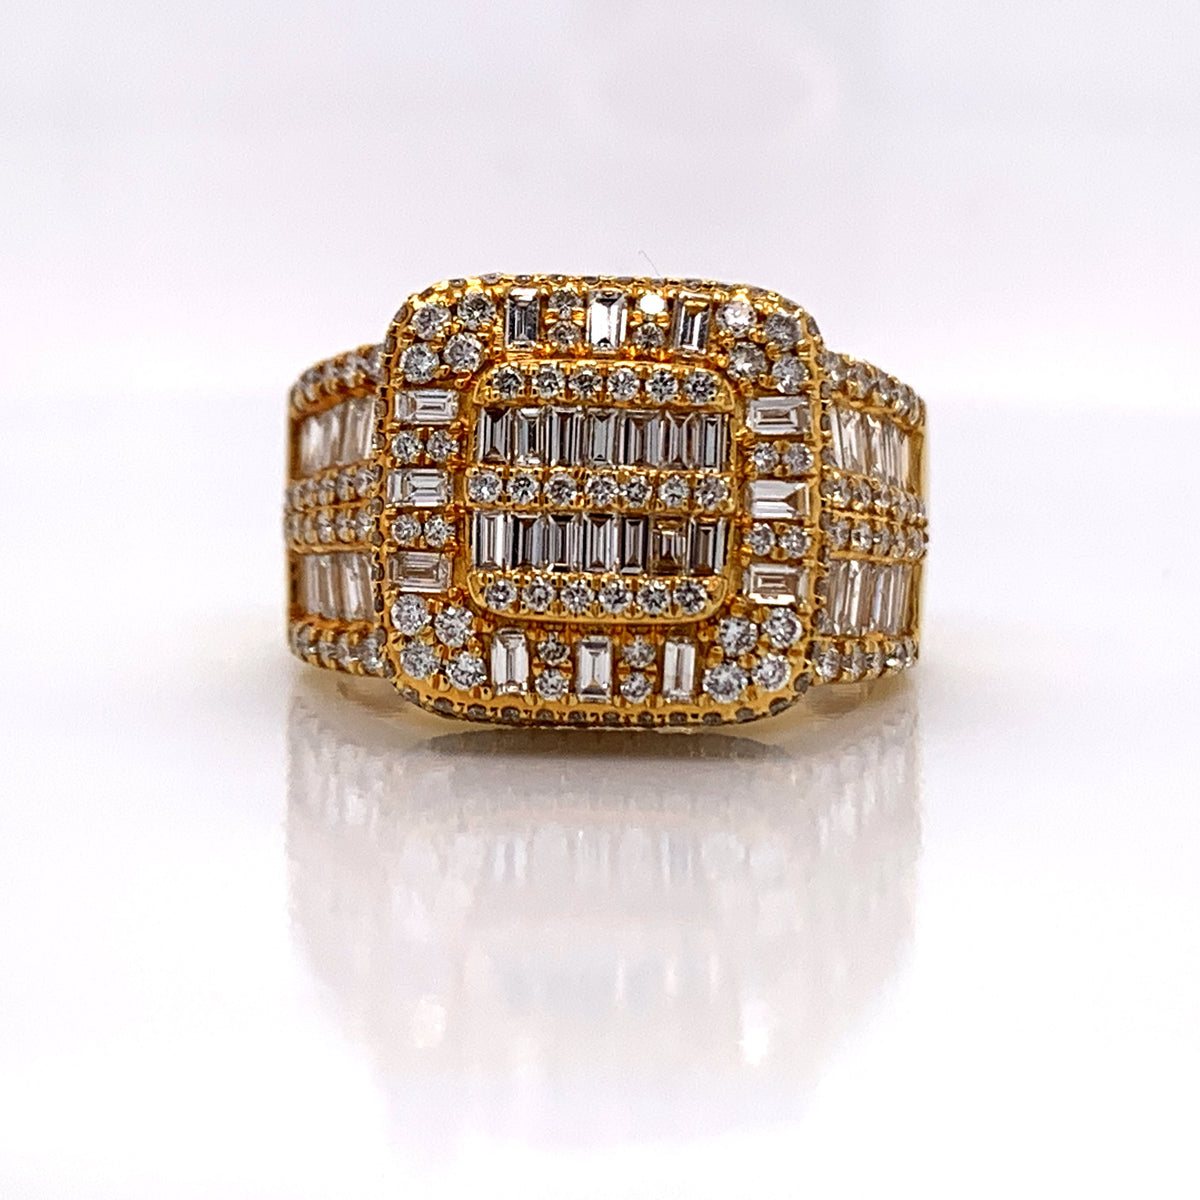 4.28CT Diamond Ring in 14K Gold - White Carat Diamonds 